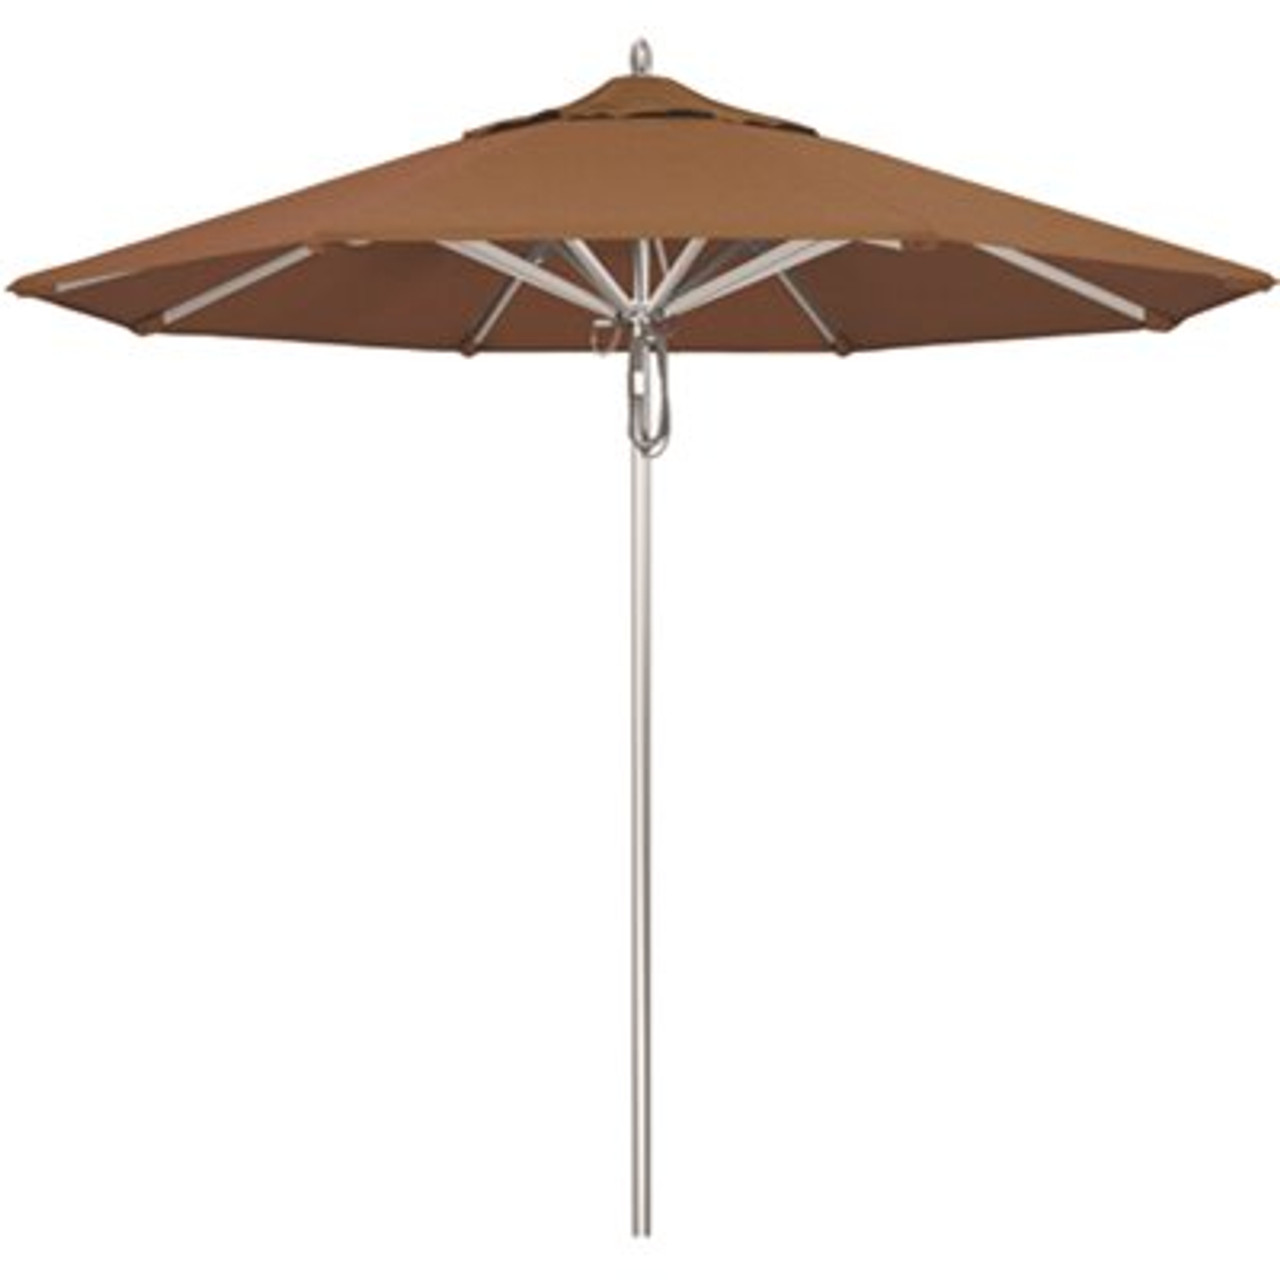 California Umbrella 9 ft. Silver Aluminum Commercial Market Patio Umbrella with Pulley Lift in Teak Sunbrella